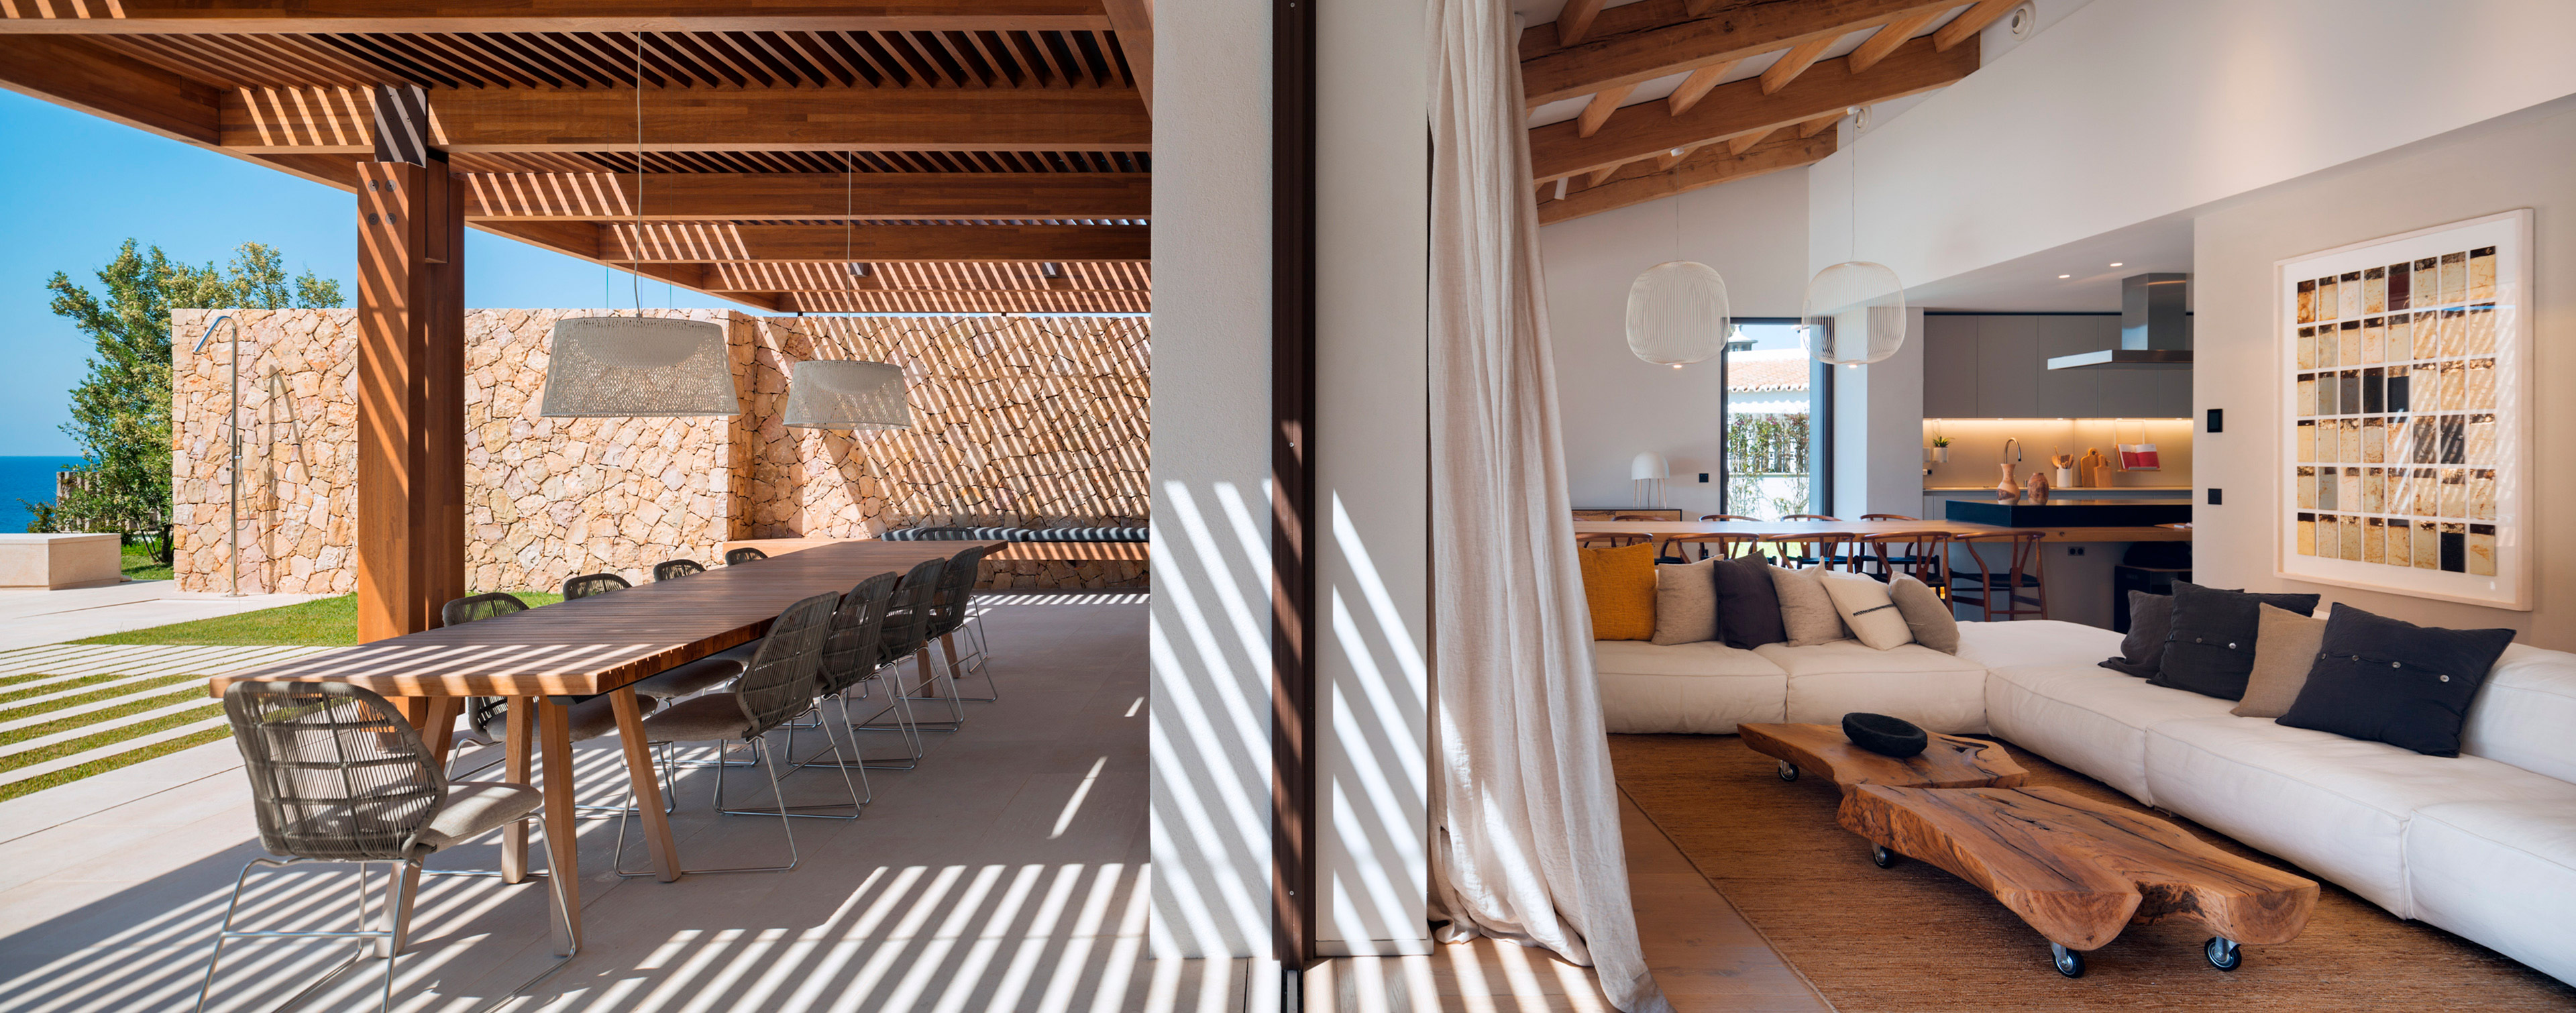 luv studio luxury architects algarve da rocha house IMG 03 - LUV Studio - Arquitectura y diseño - Barcelona